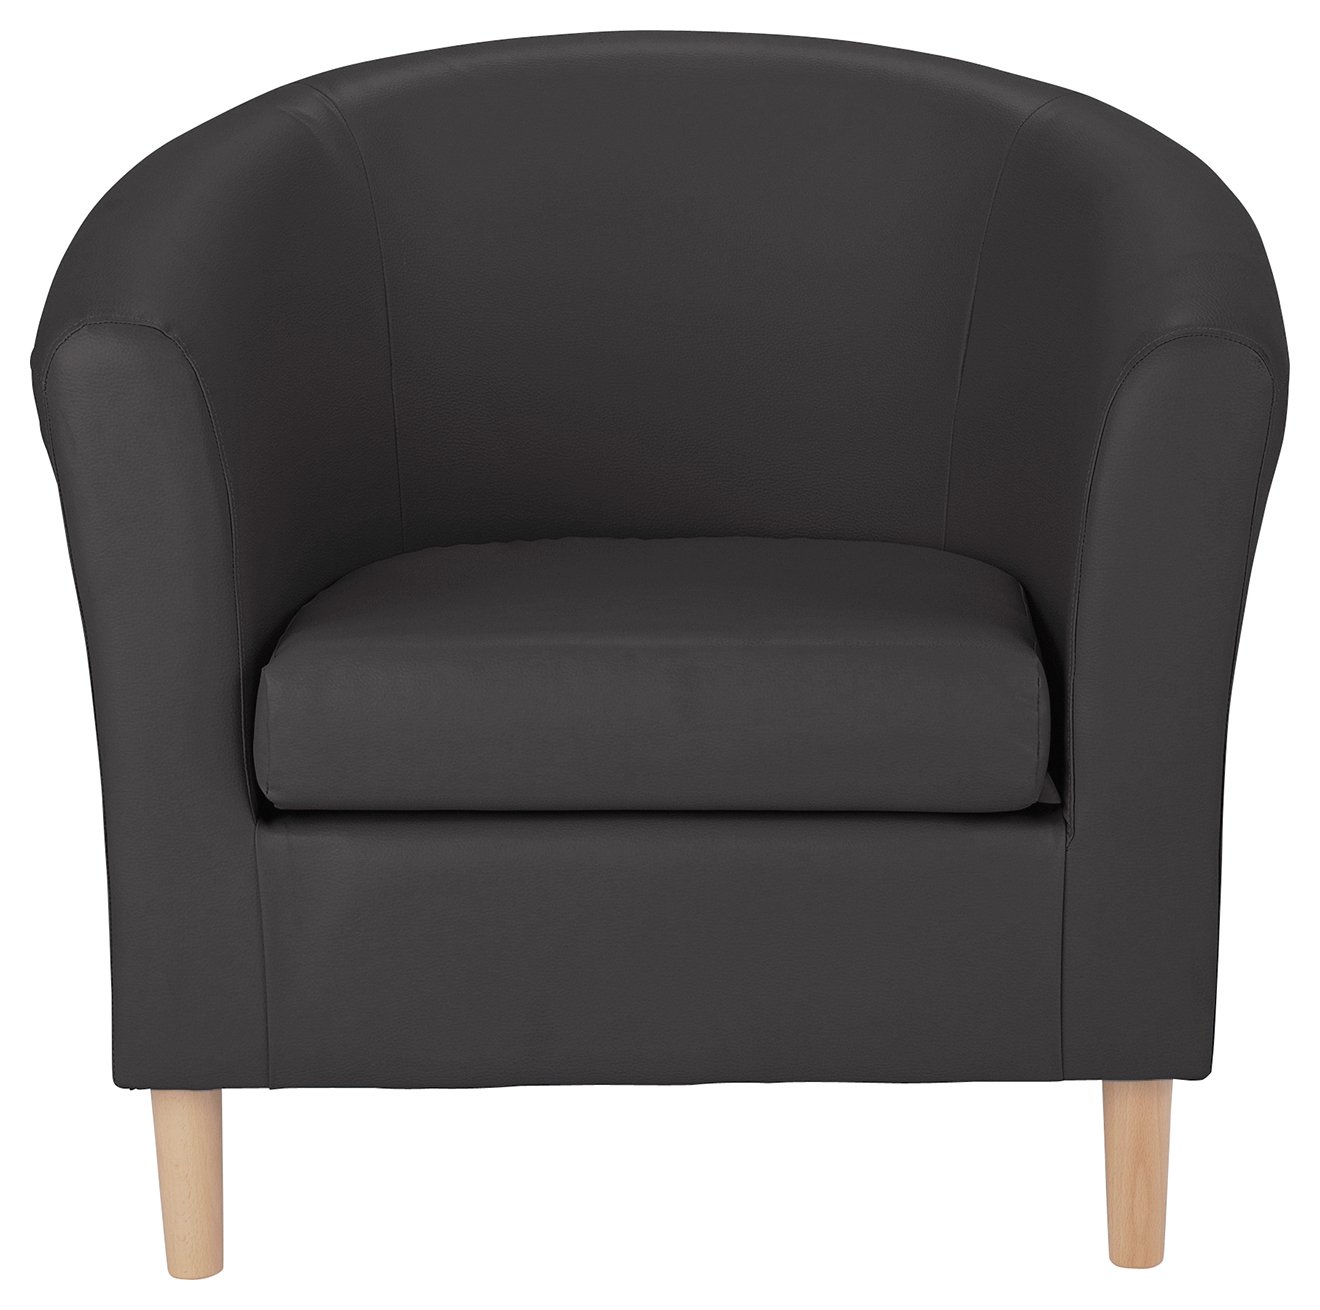 Argos Home Faux Leather Tub Chair - Black